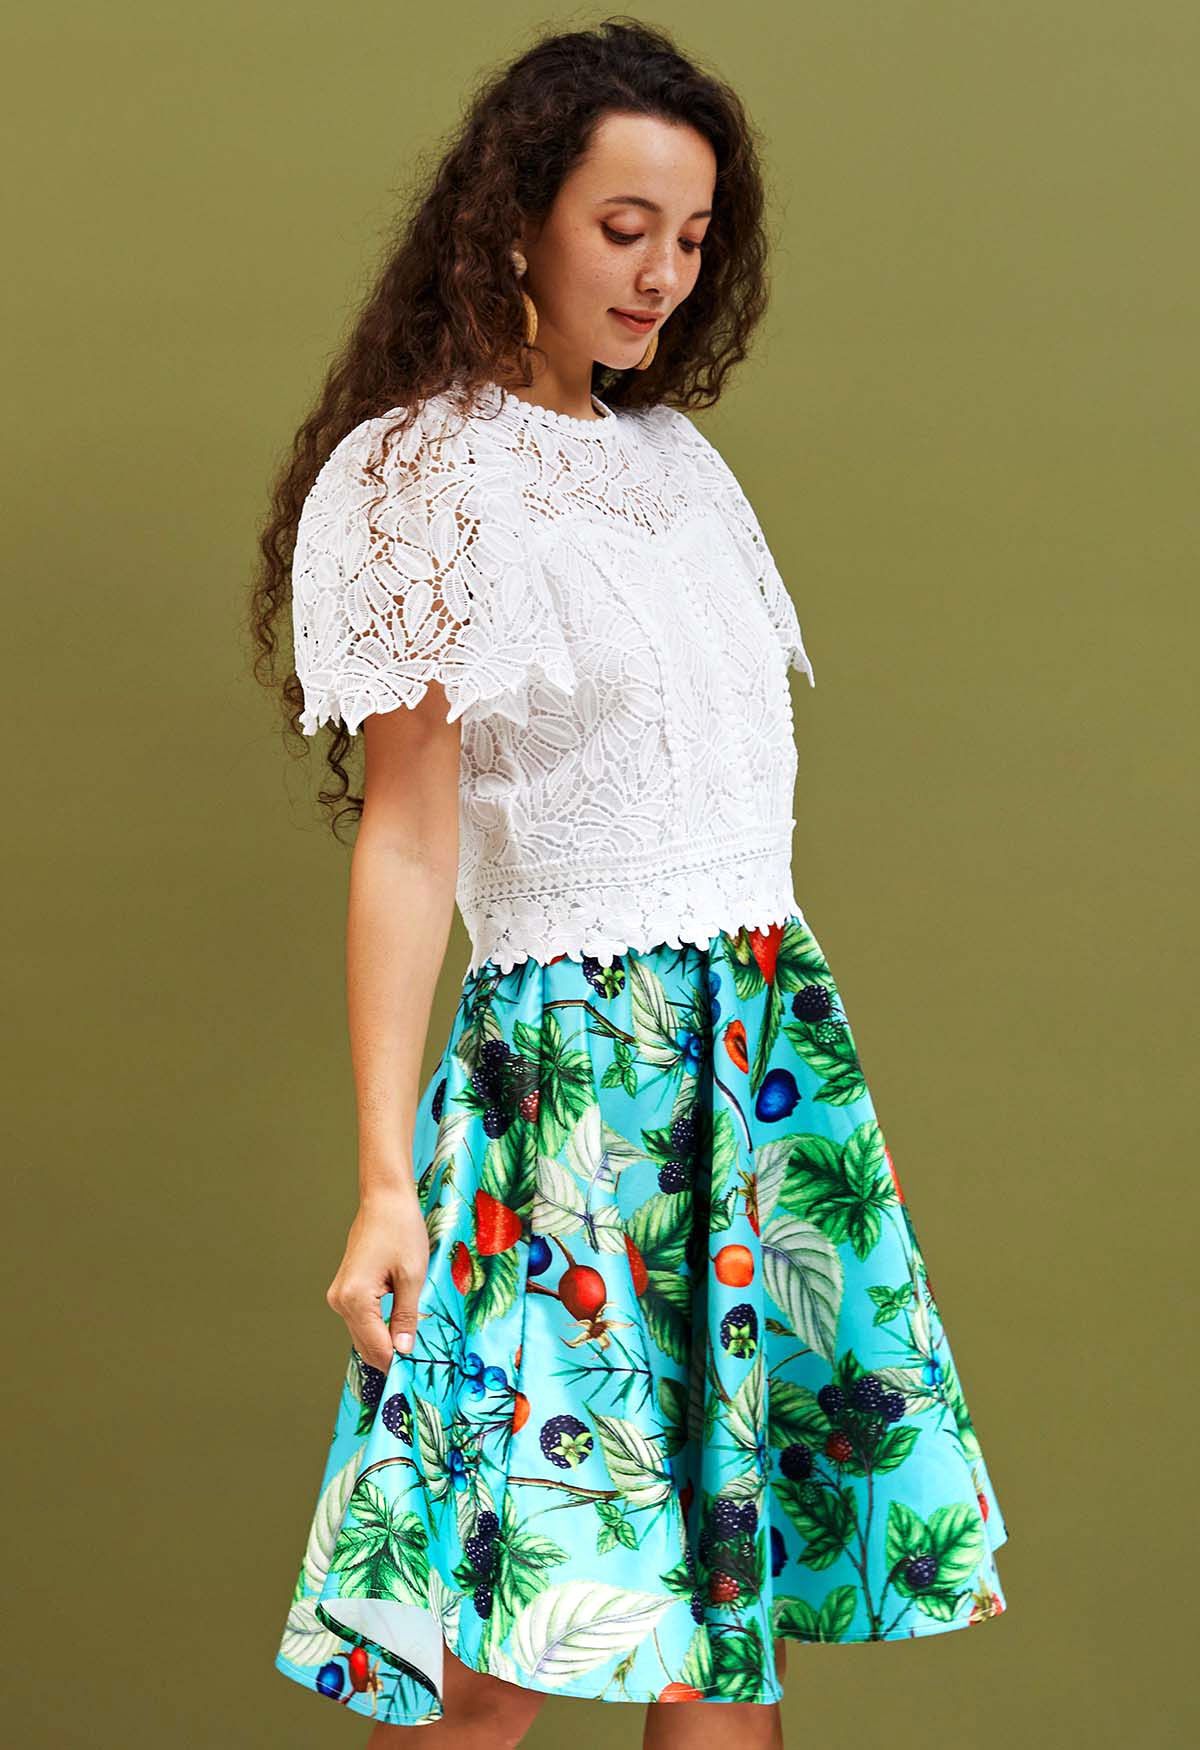 Glossy Fruit Printed A-Line Midi Skirt